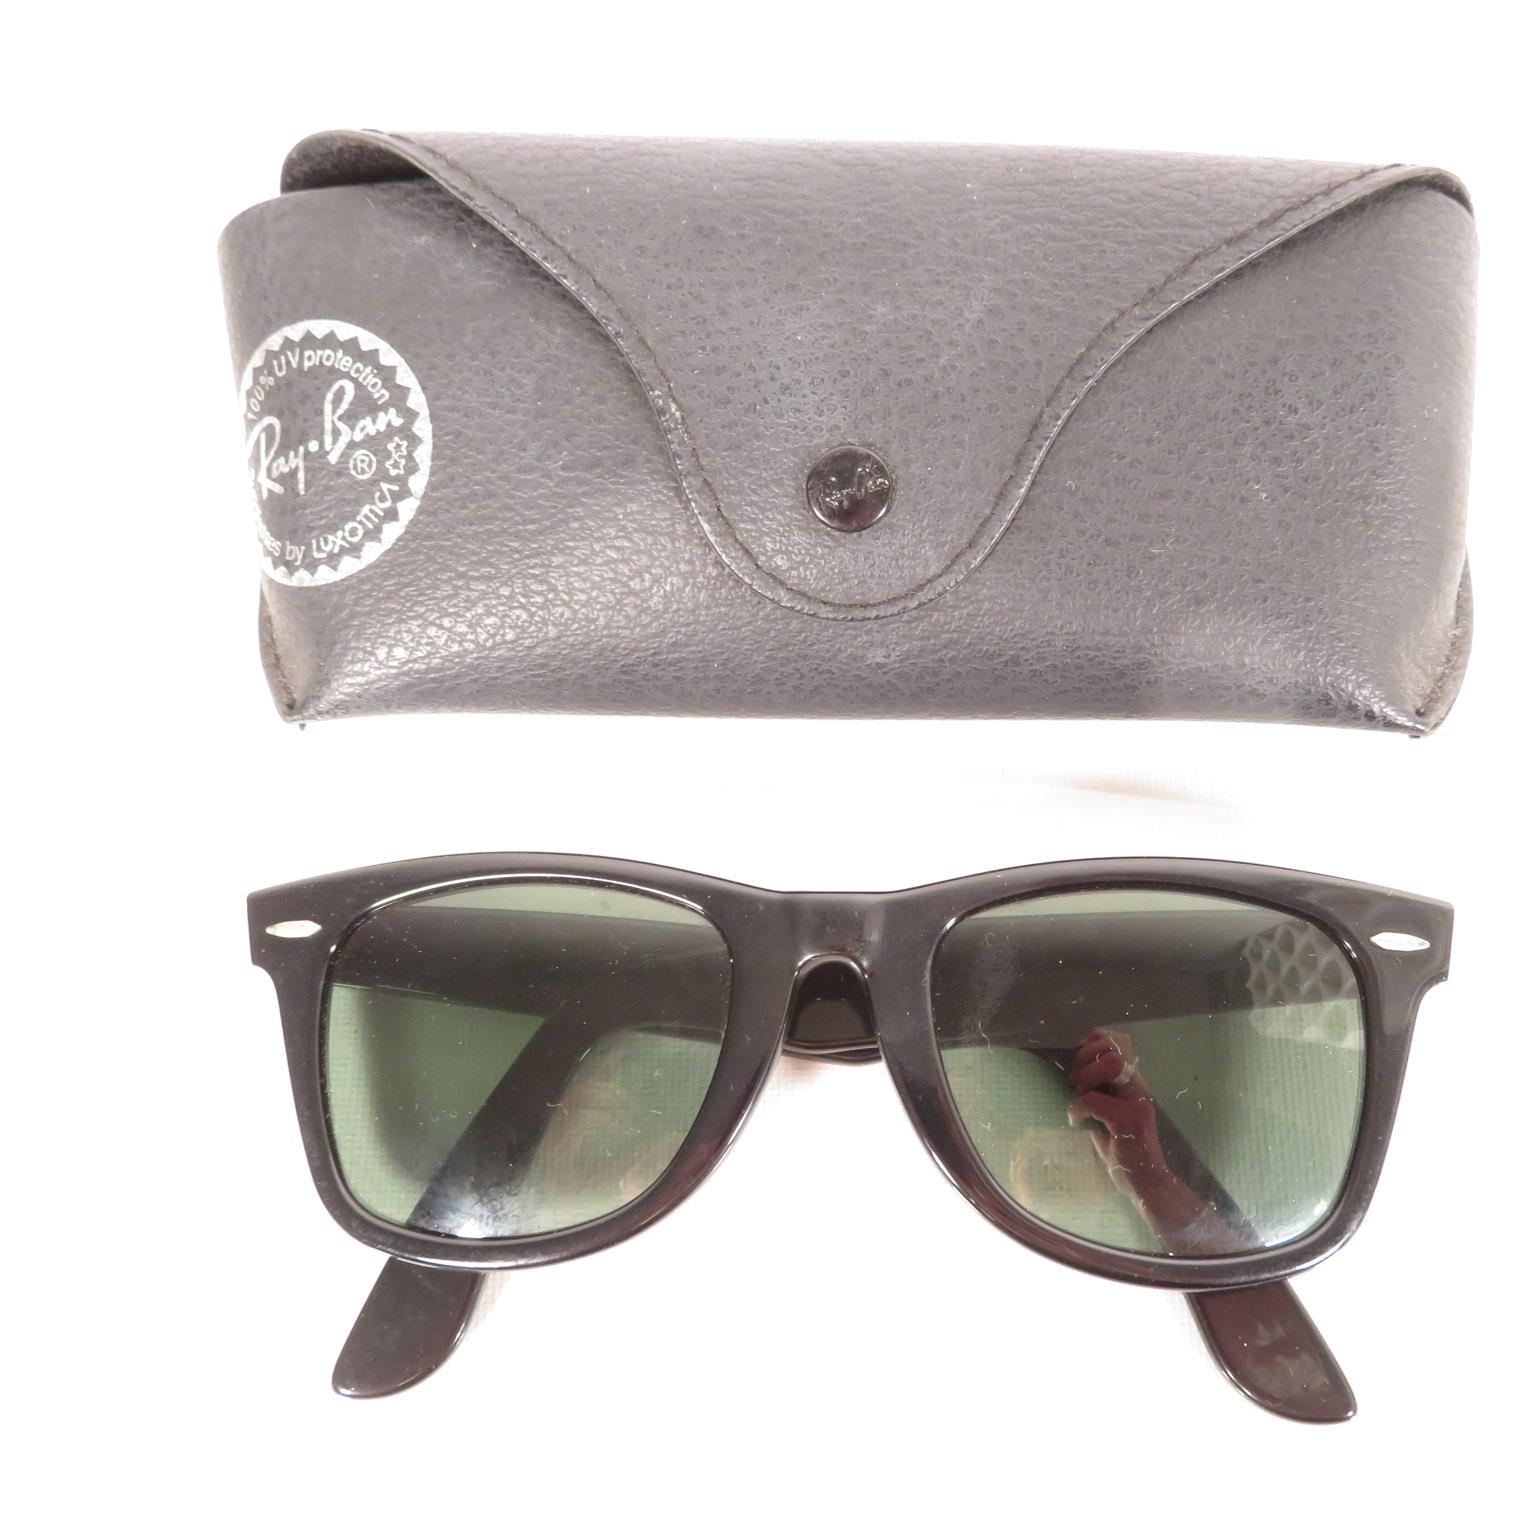 5x sets Ray Ban sunglasses - - Image 2 of 24